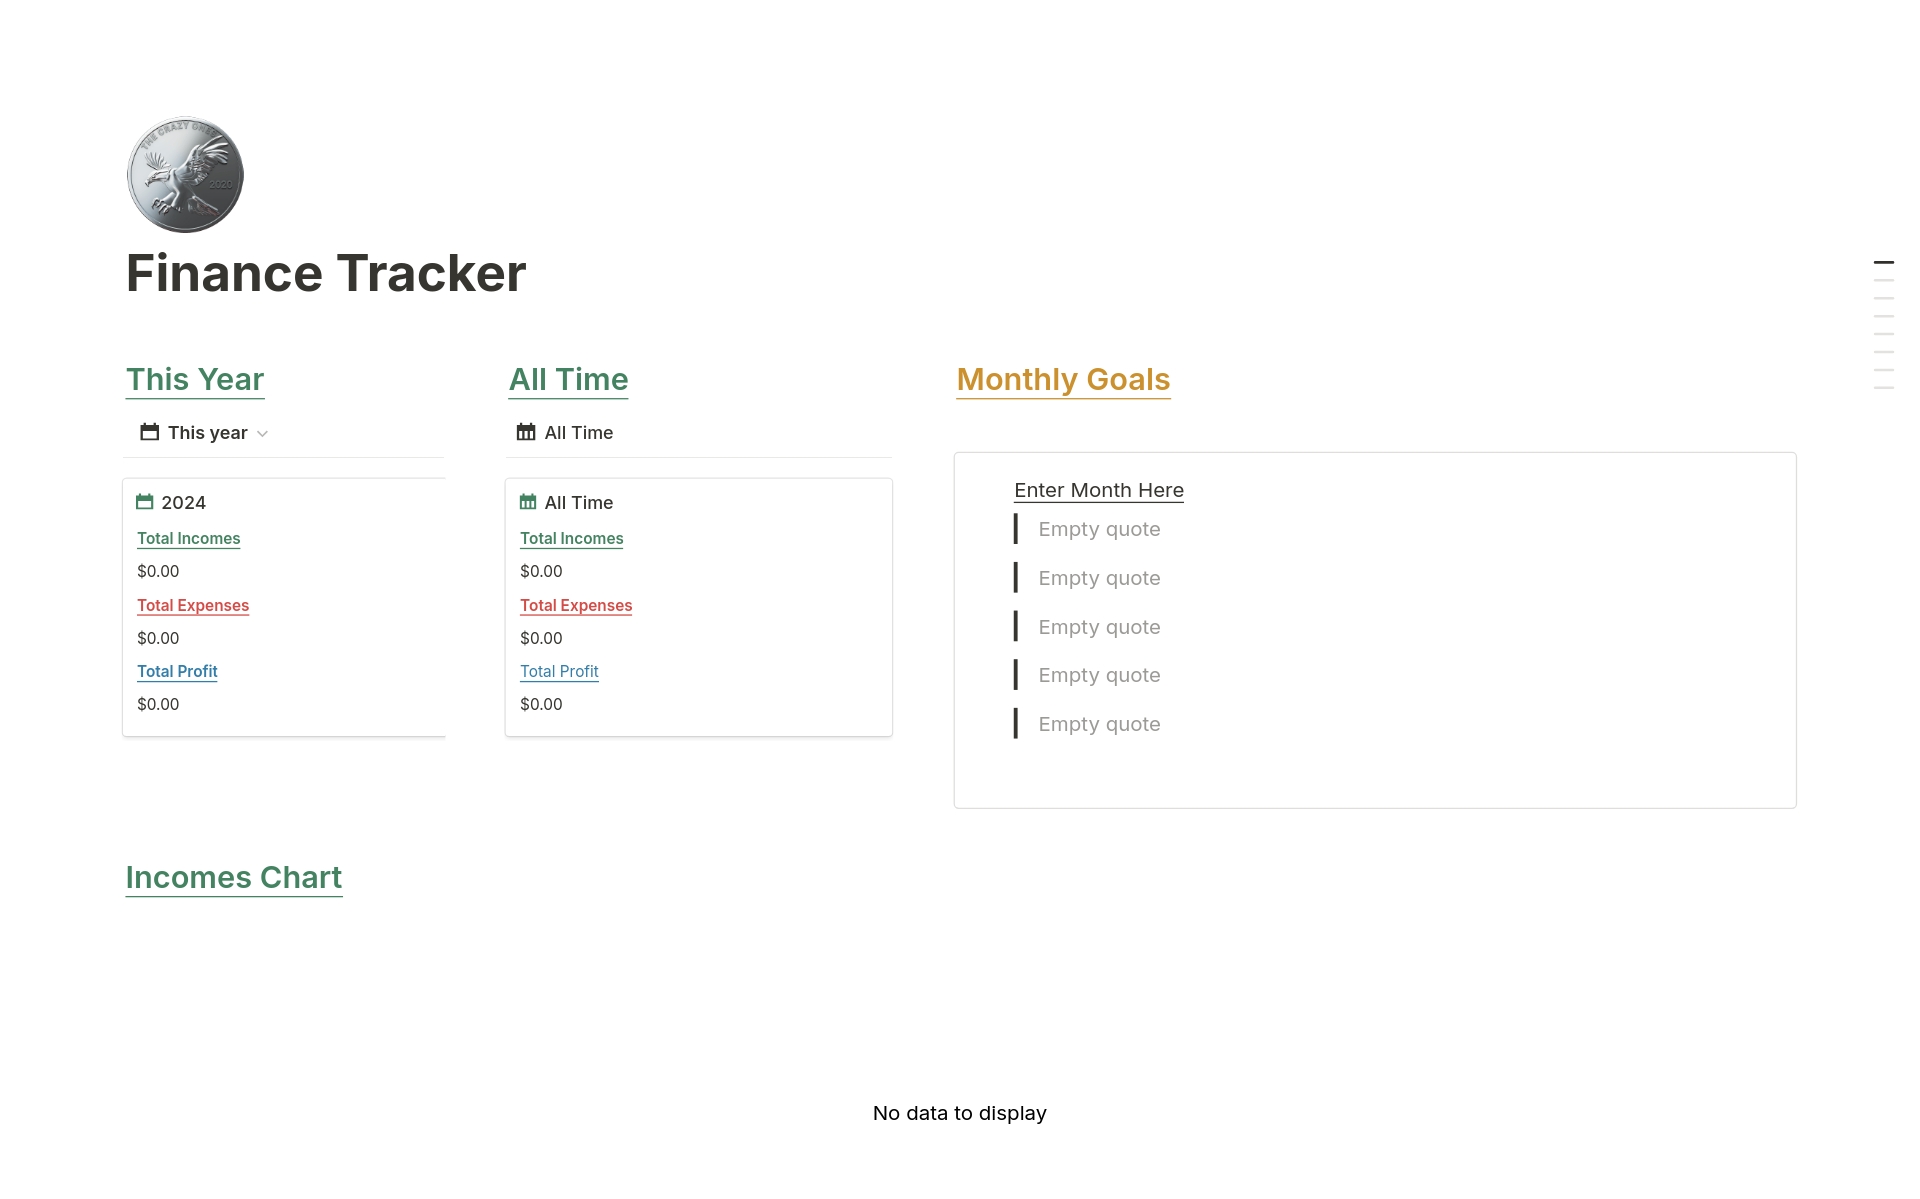 Vista previa de plantilla para Notion Finance Tracker